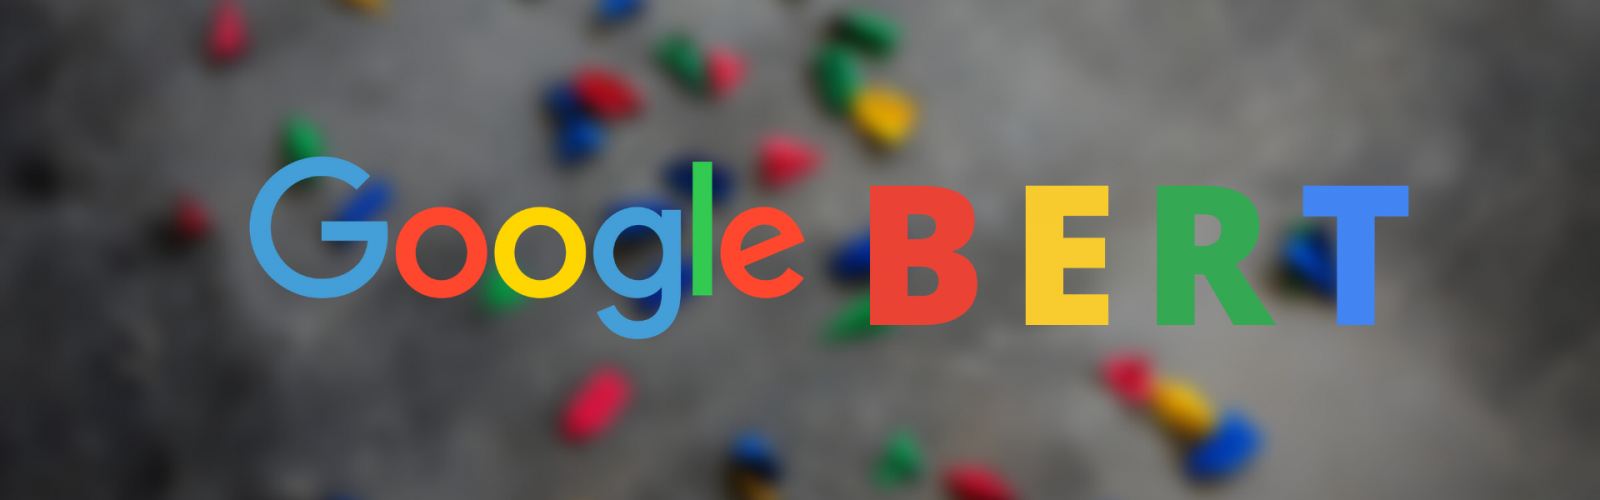 Google BERT - 2019 - explications par agence web 3SC Global Services - SEO